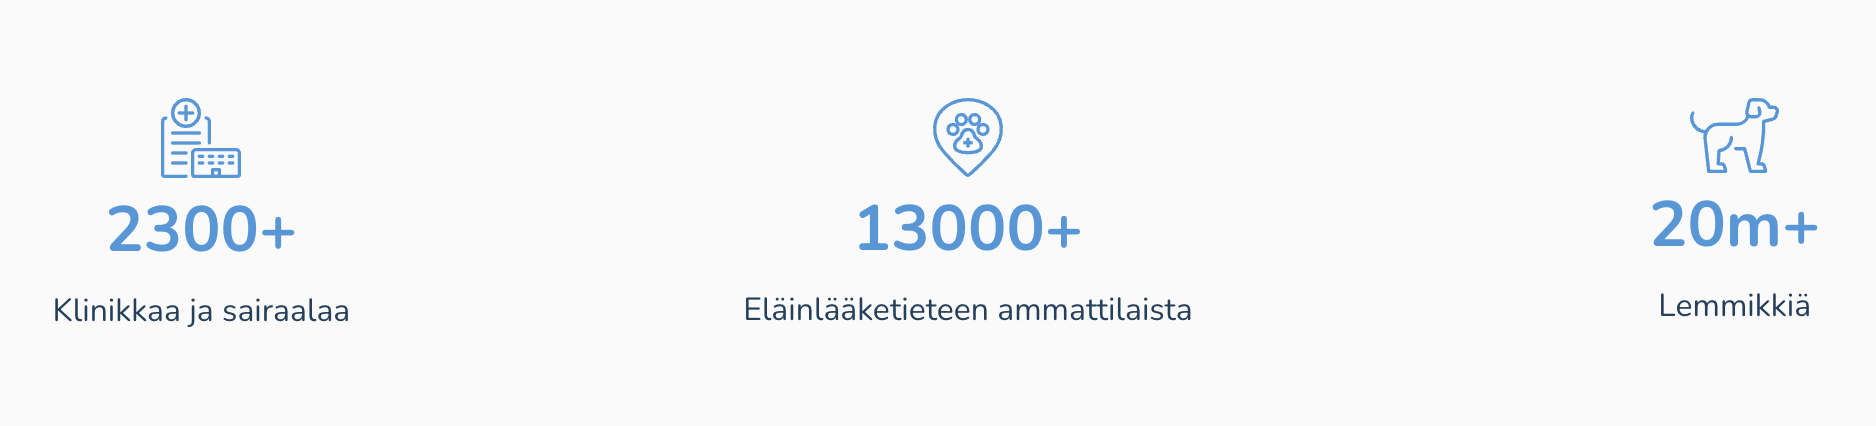 finnish-stats-banner